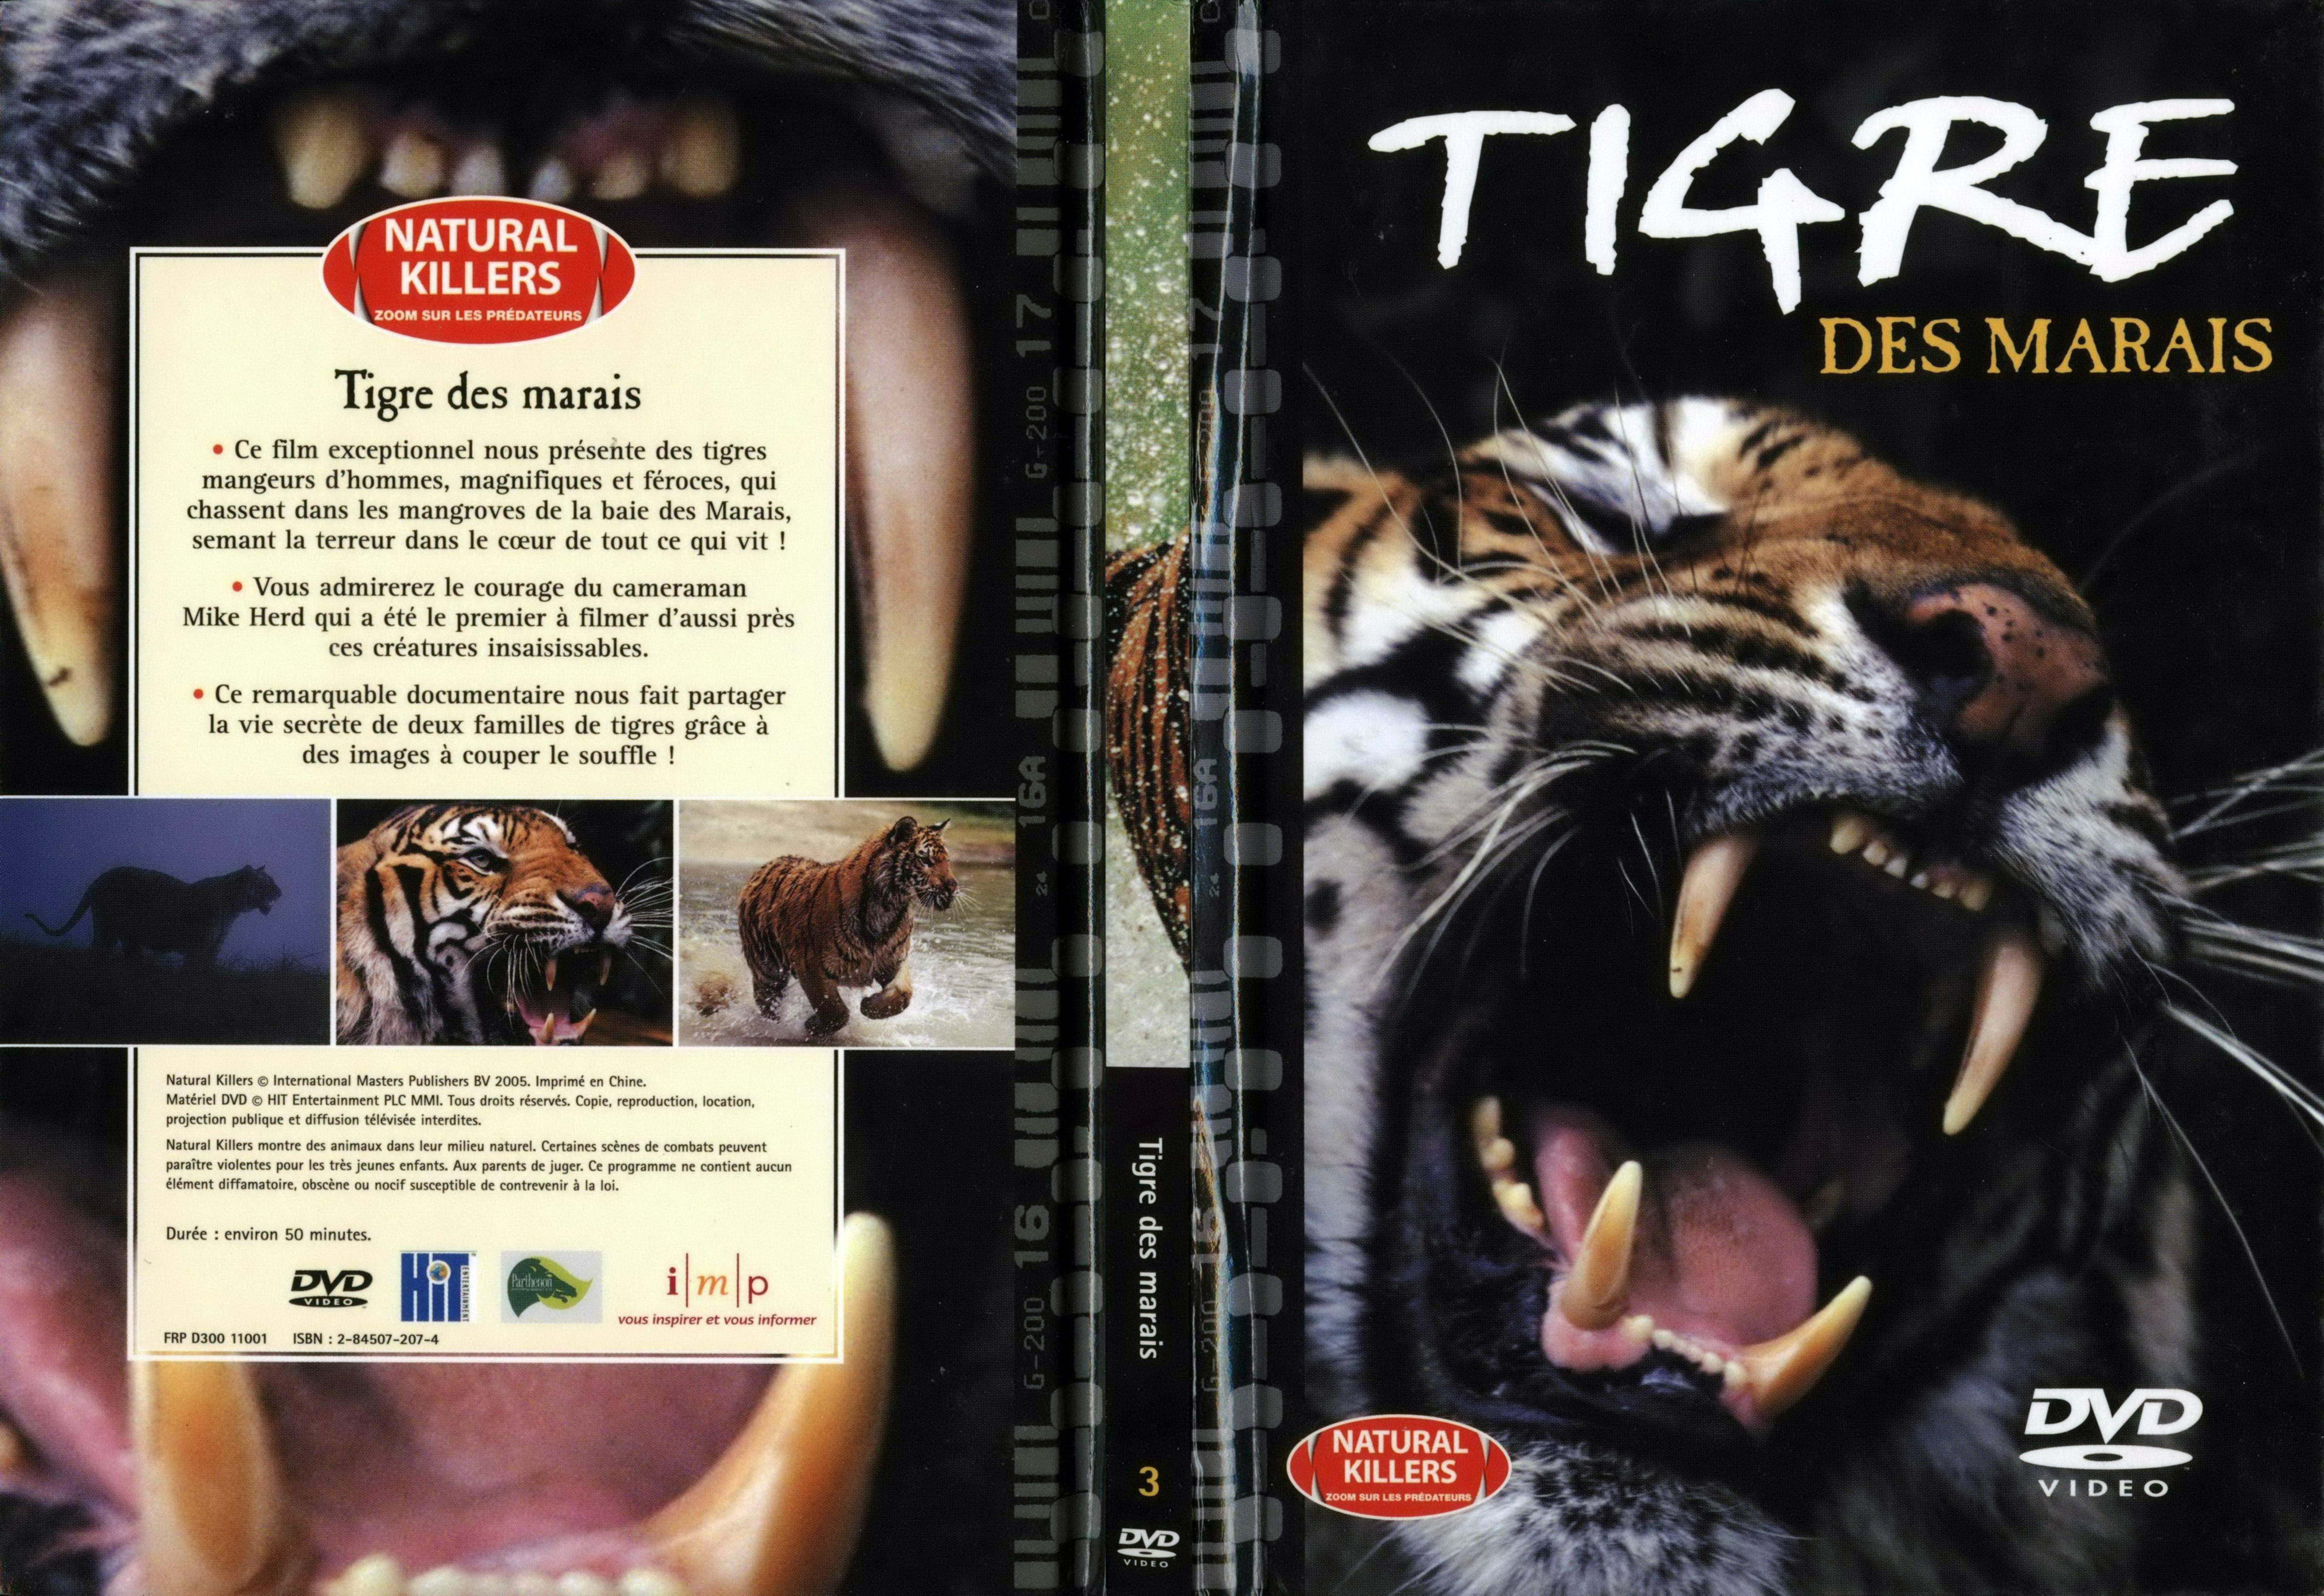 Jaquette DVD Natural killers Tigre des marais